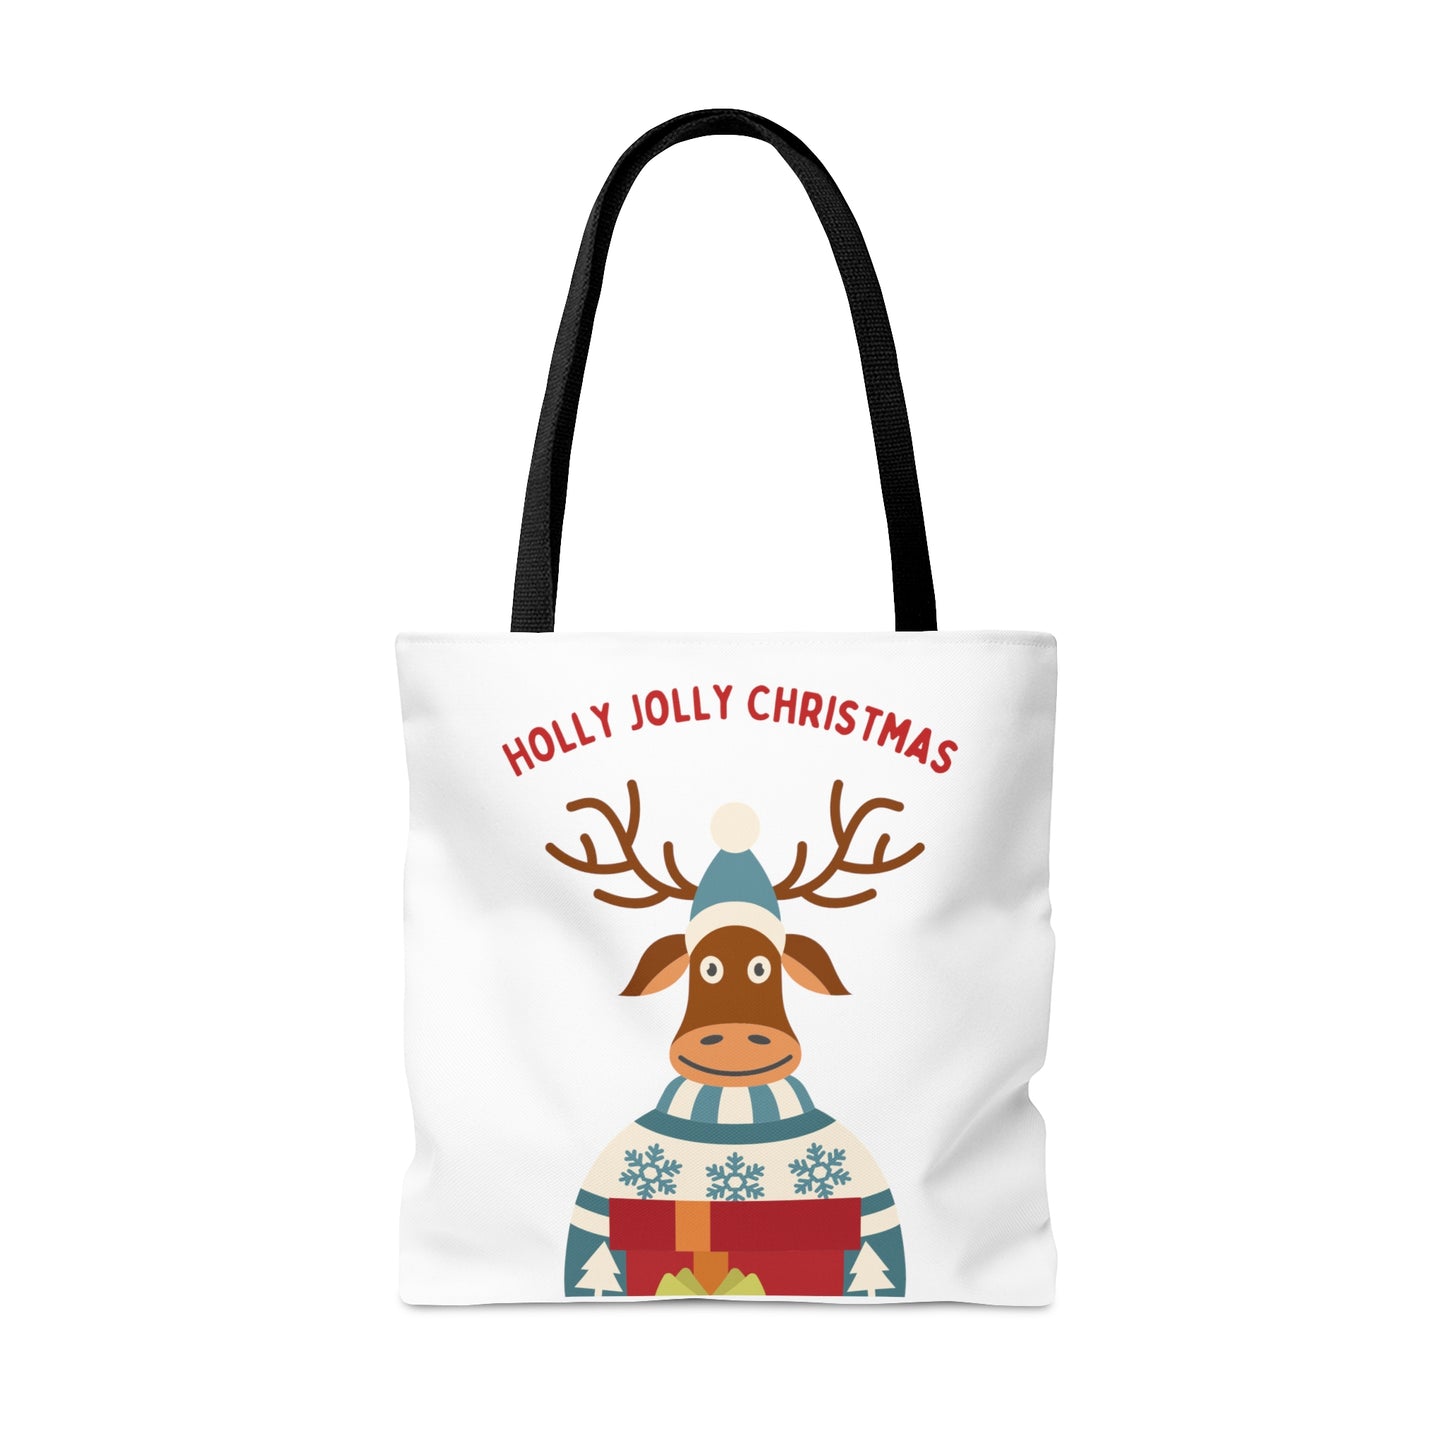 Holly Jolly Christmas Tote Bag